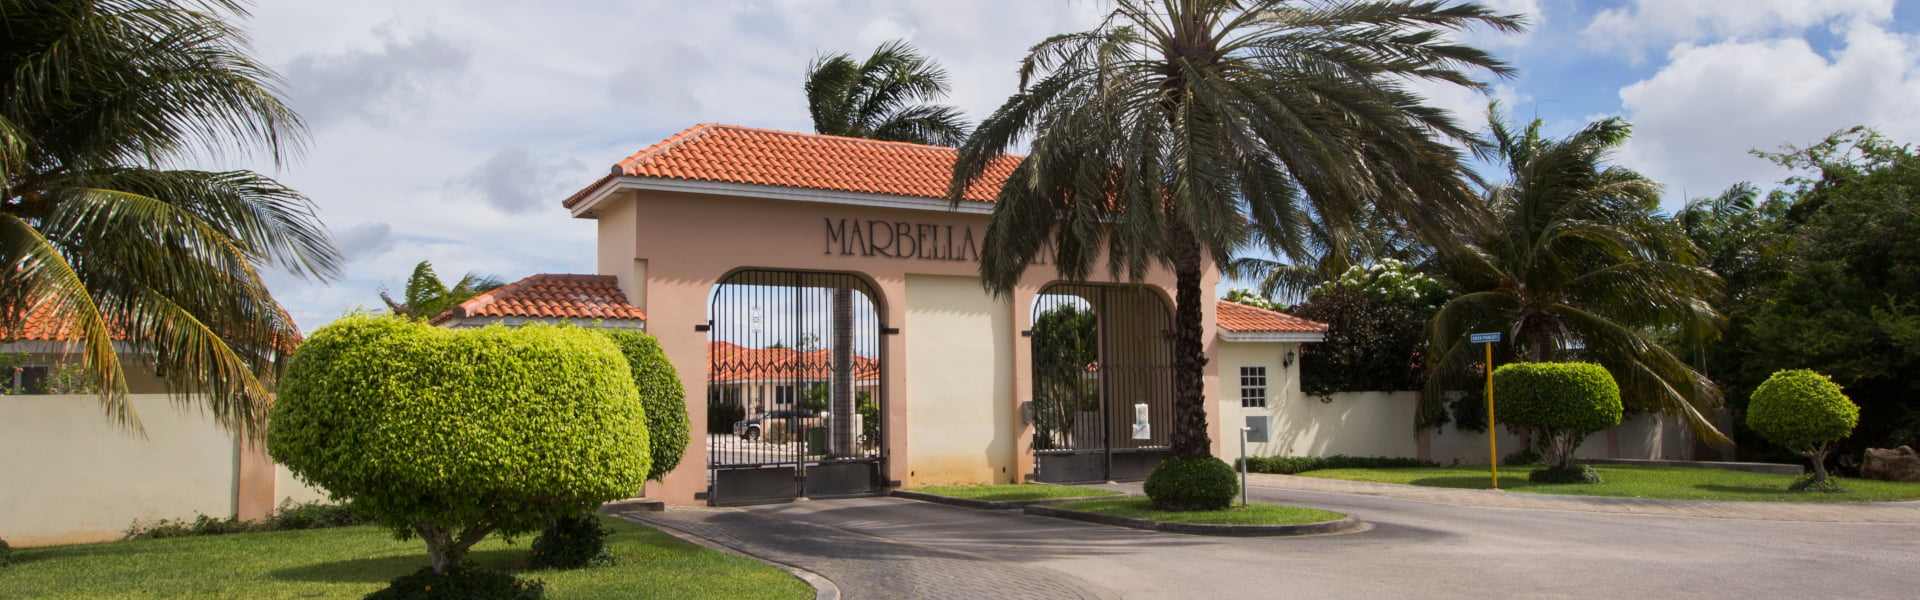 Holidayhomes Marbella Estate resort for rent